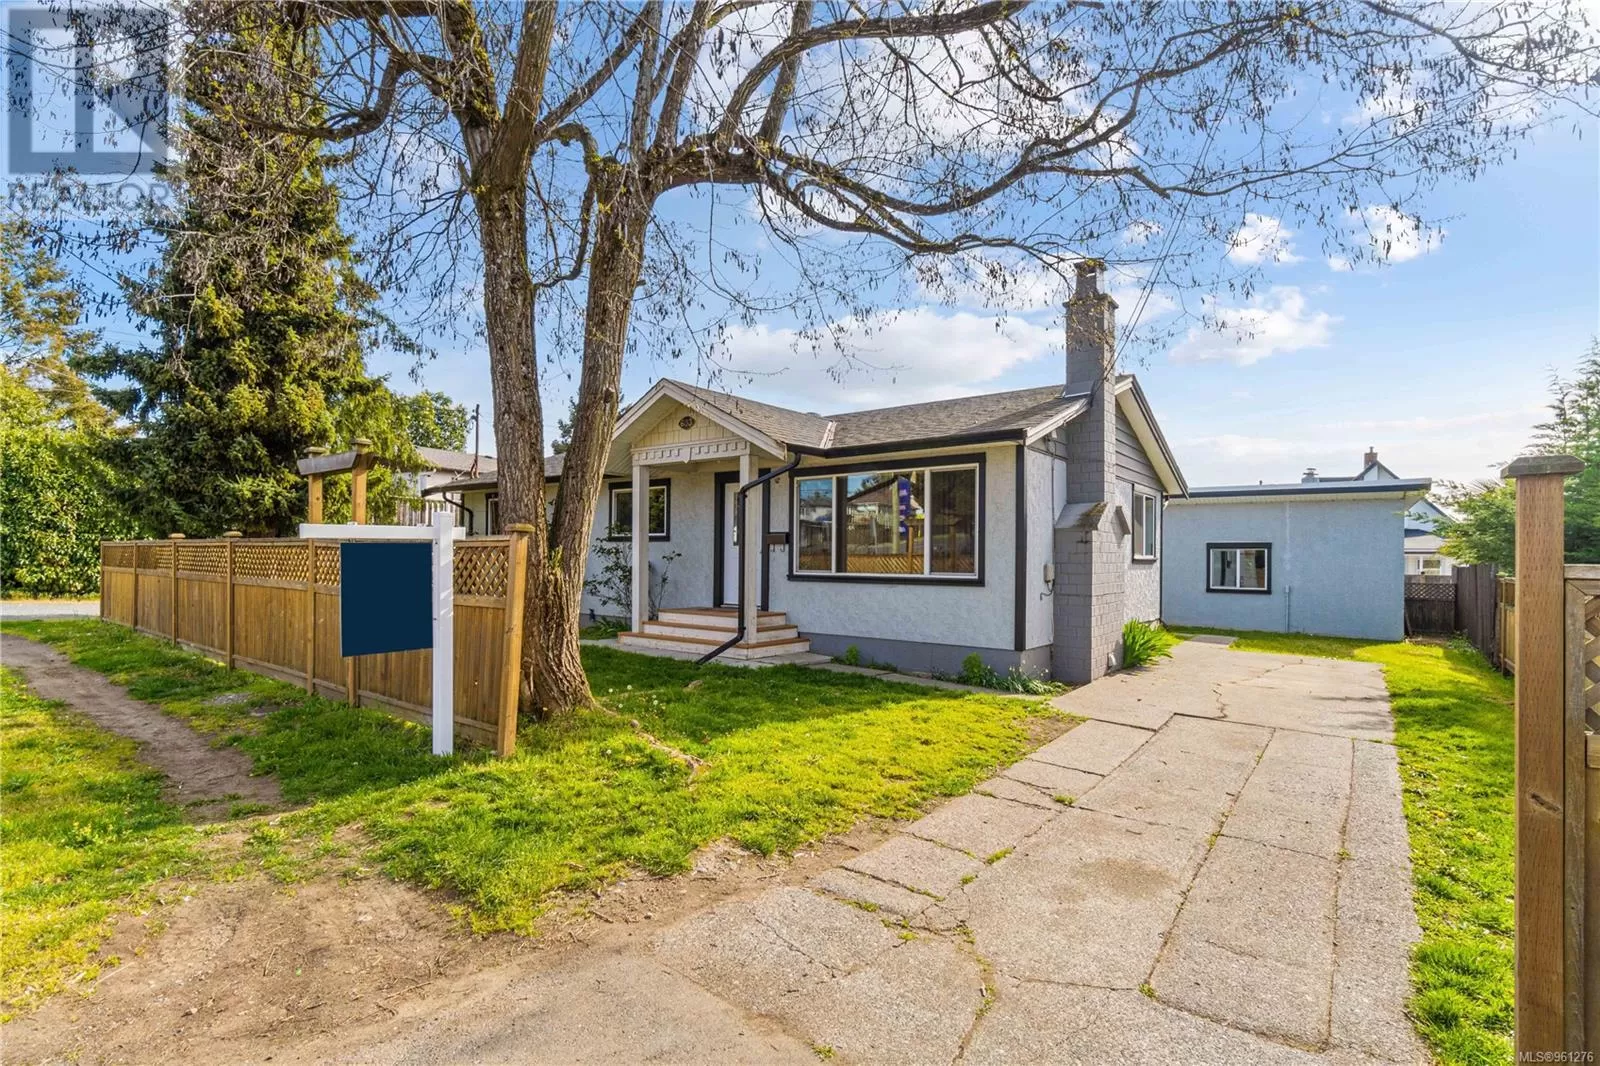 House for rent: 603 Victoria Rd, Nanaimo, British Columbia V9R 4R6